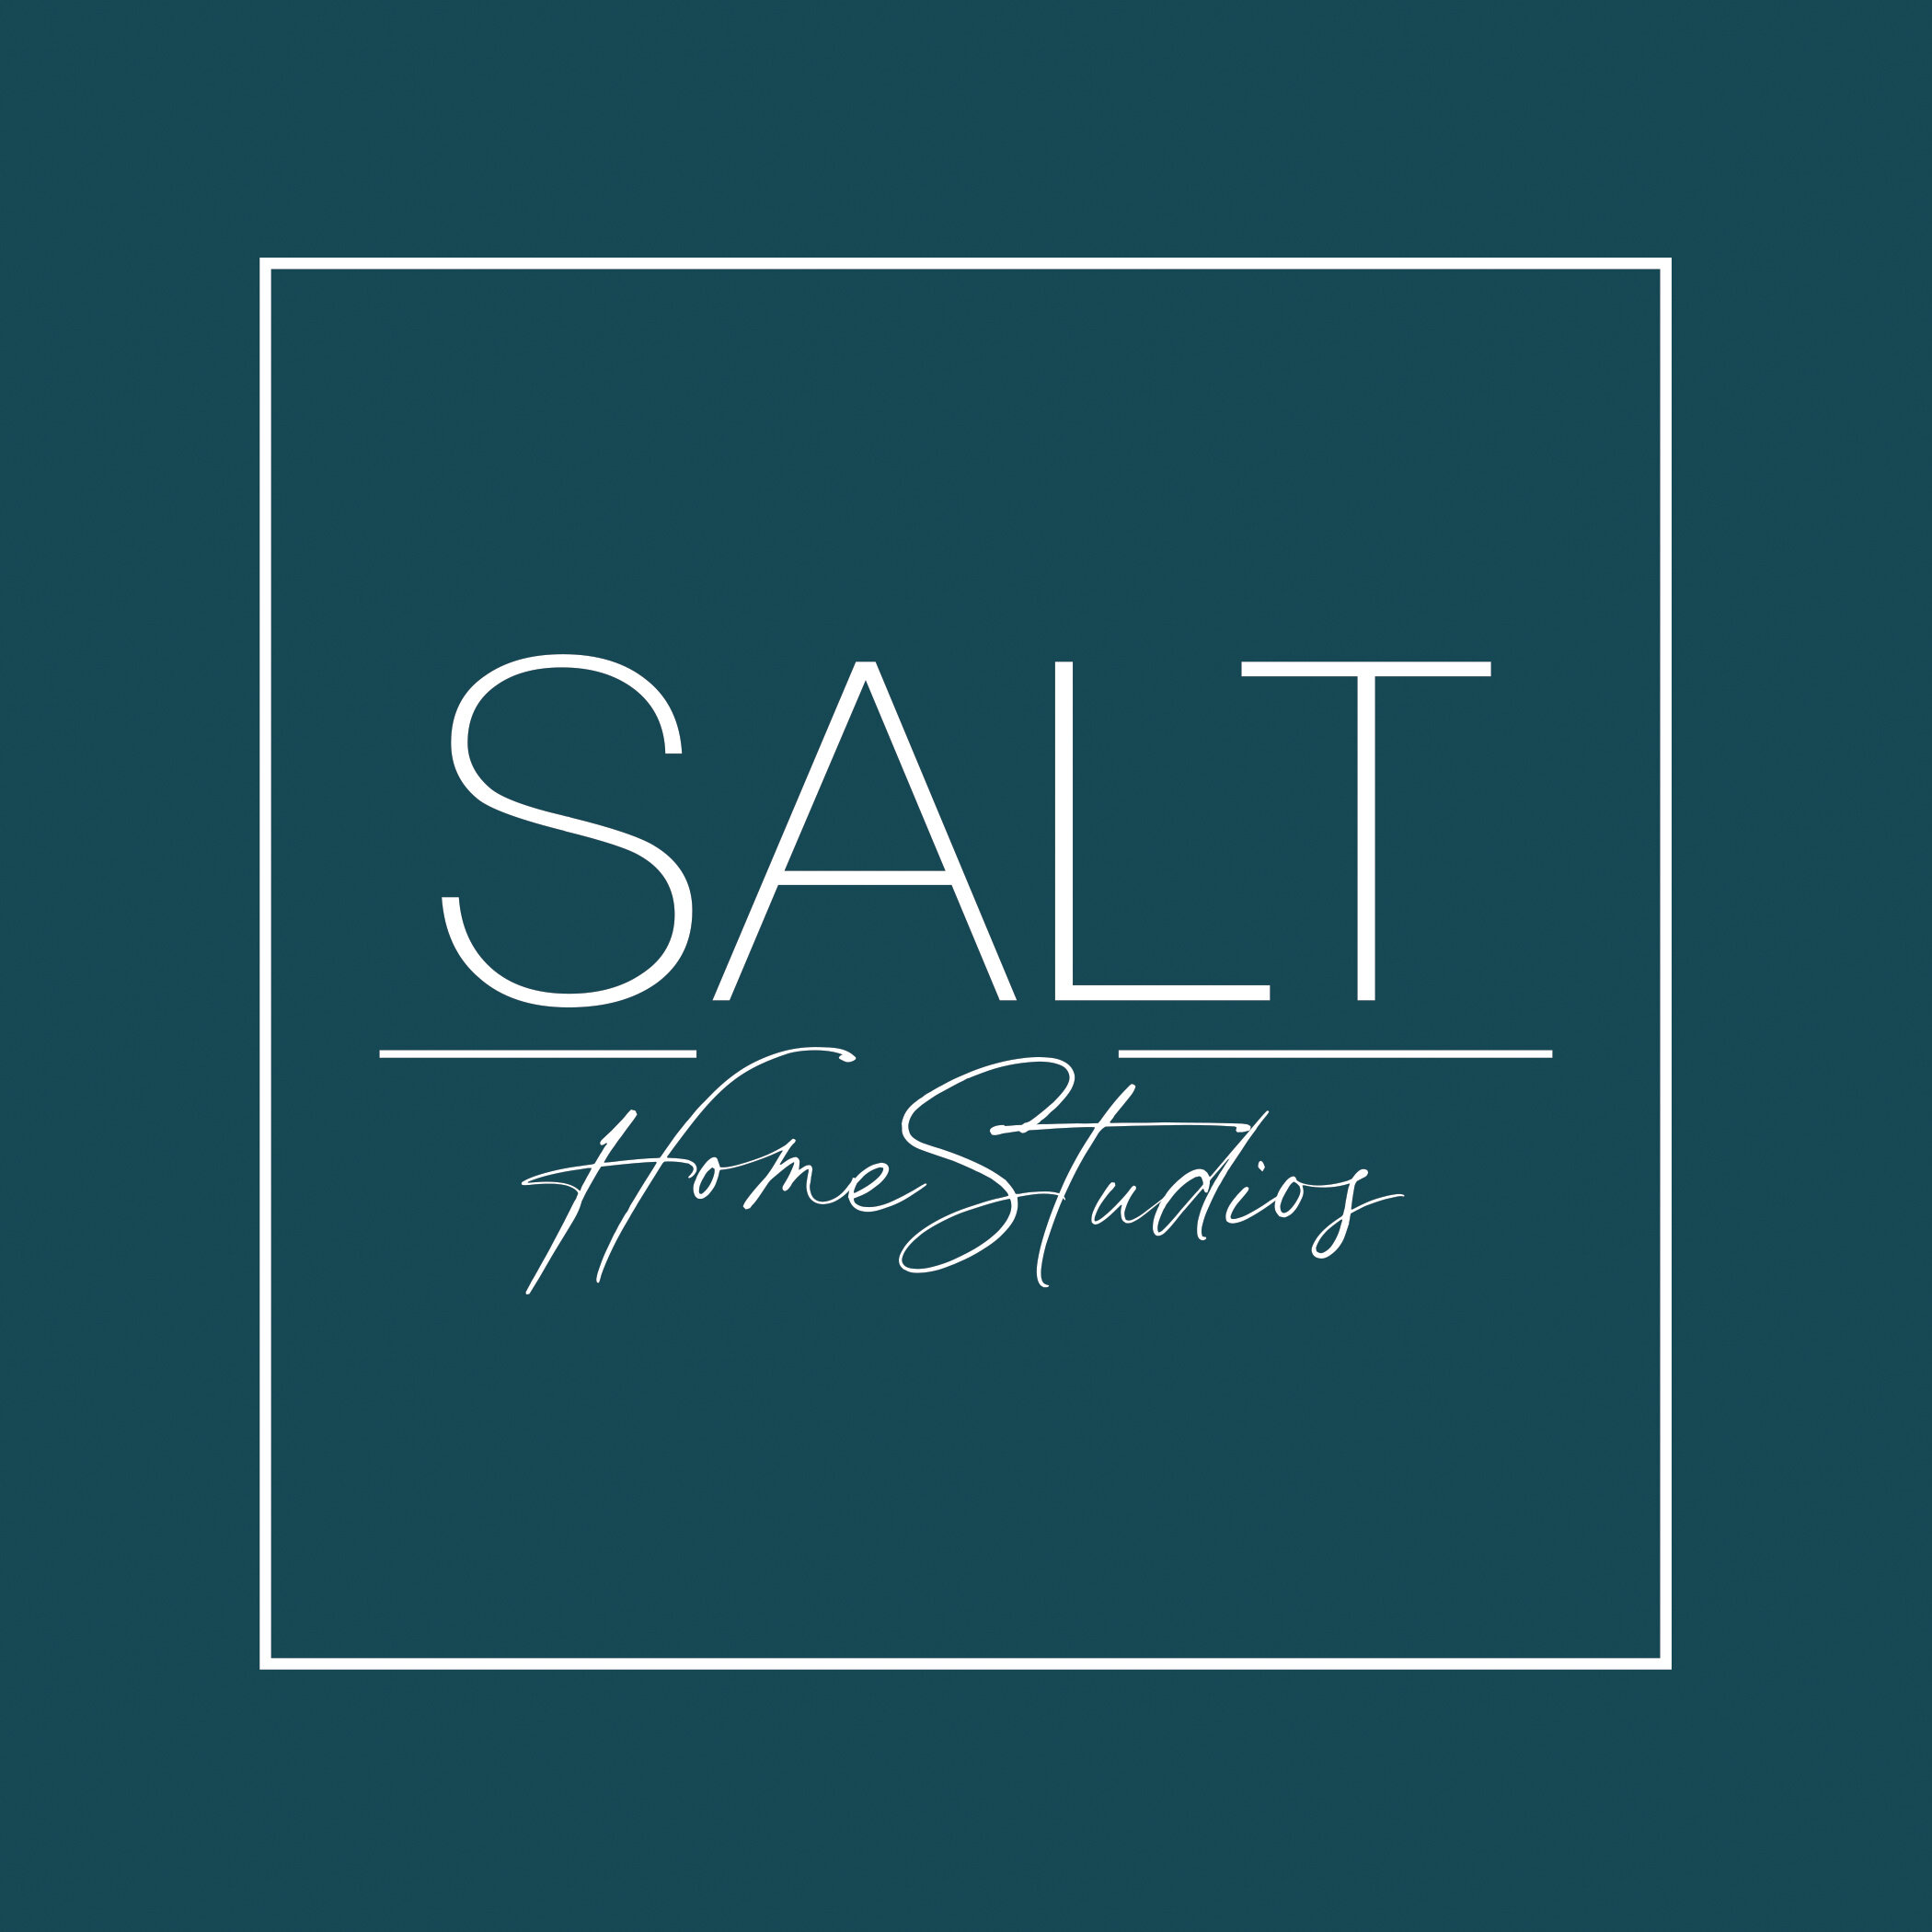 SALT Home Studios